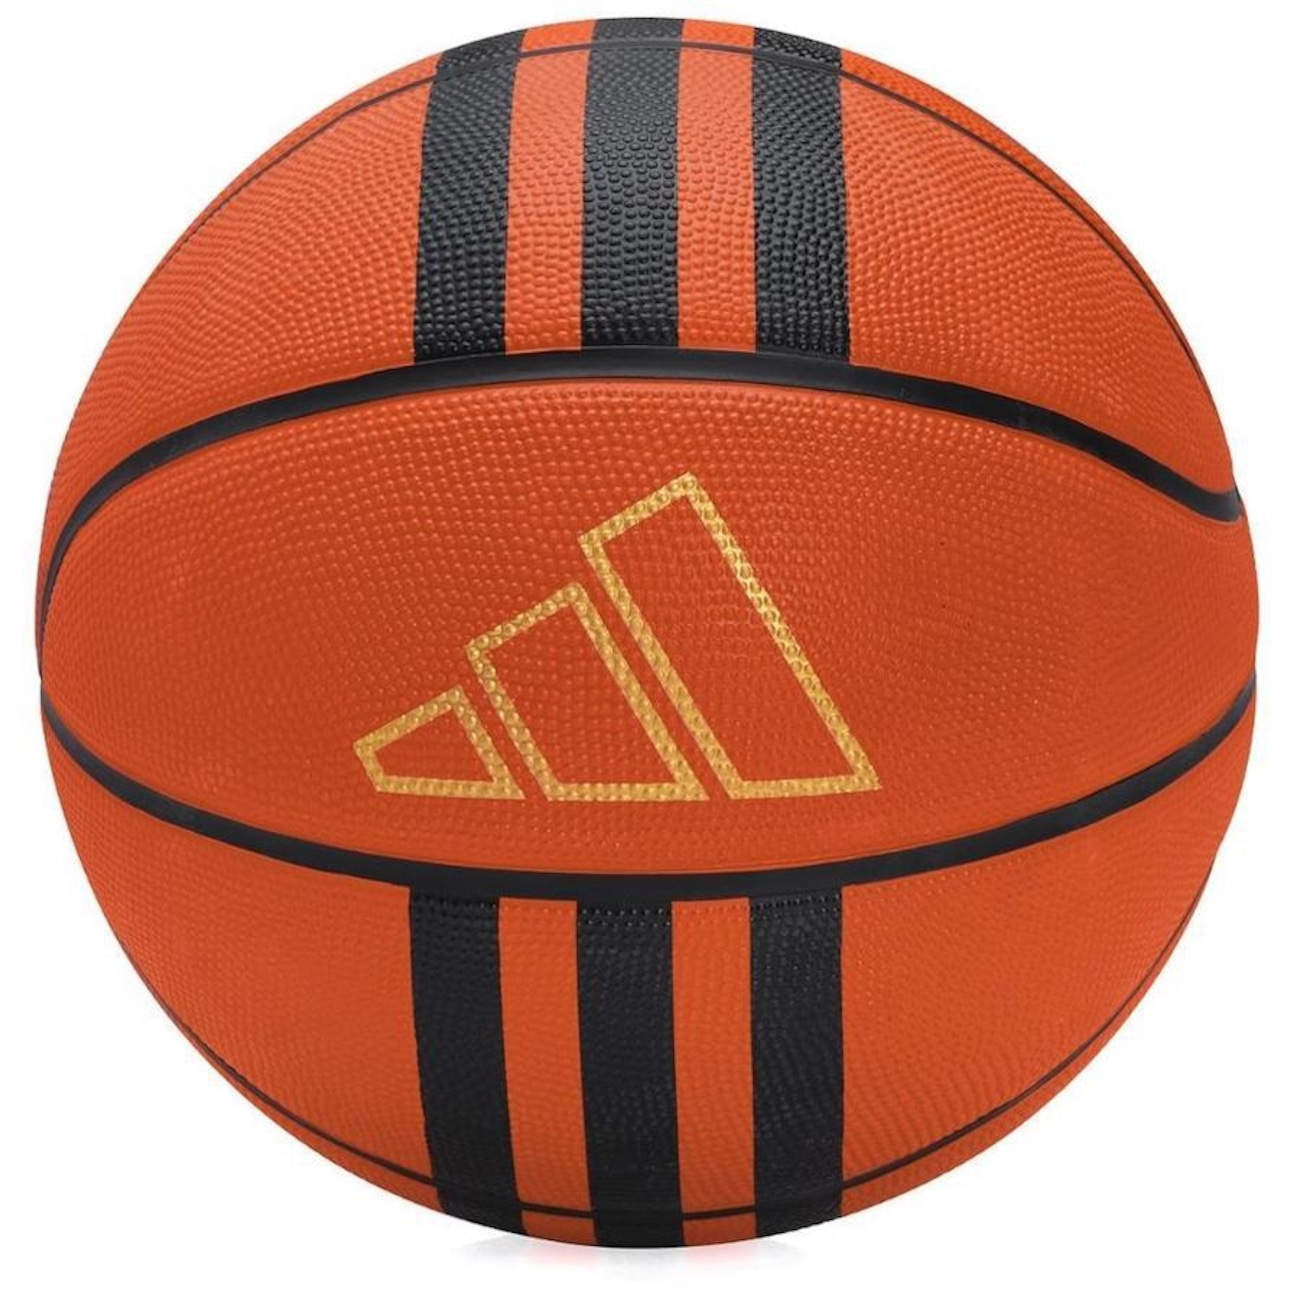 Bola de Basquete Wilson NBA DRV Pro Laranja - FutFanatics